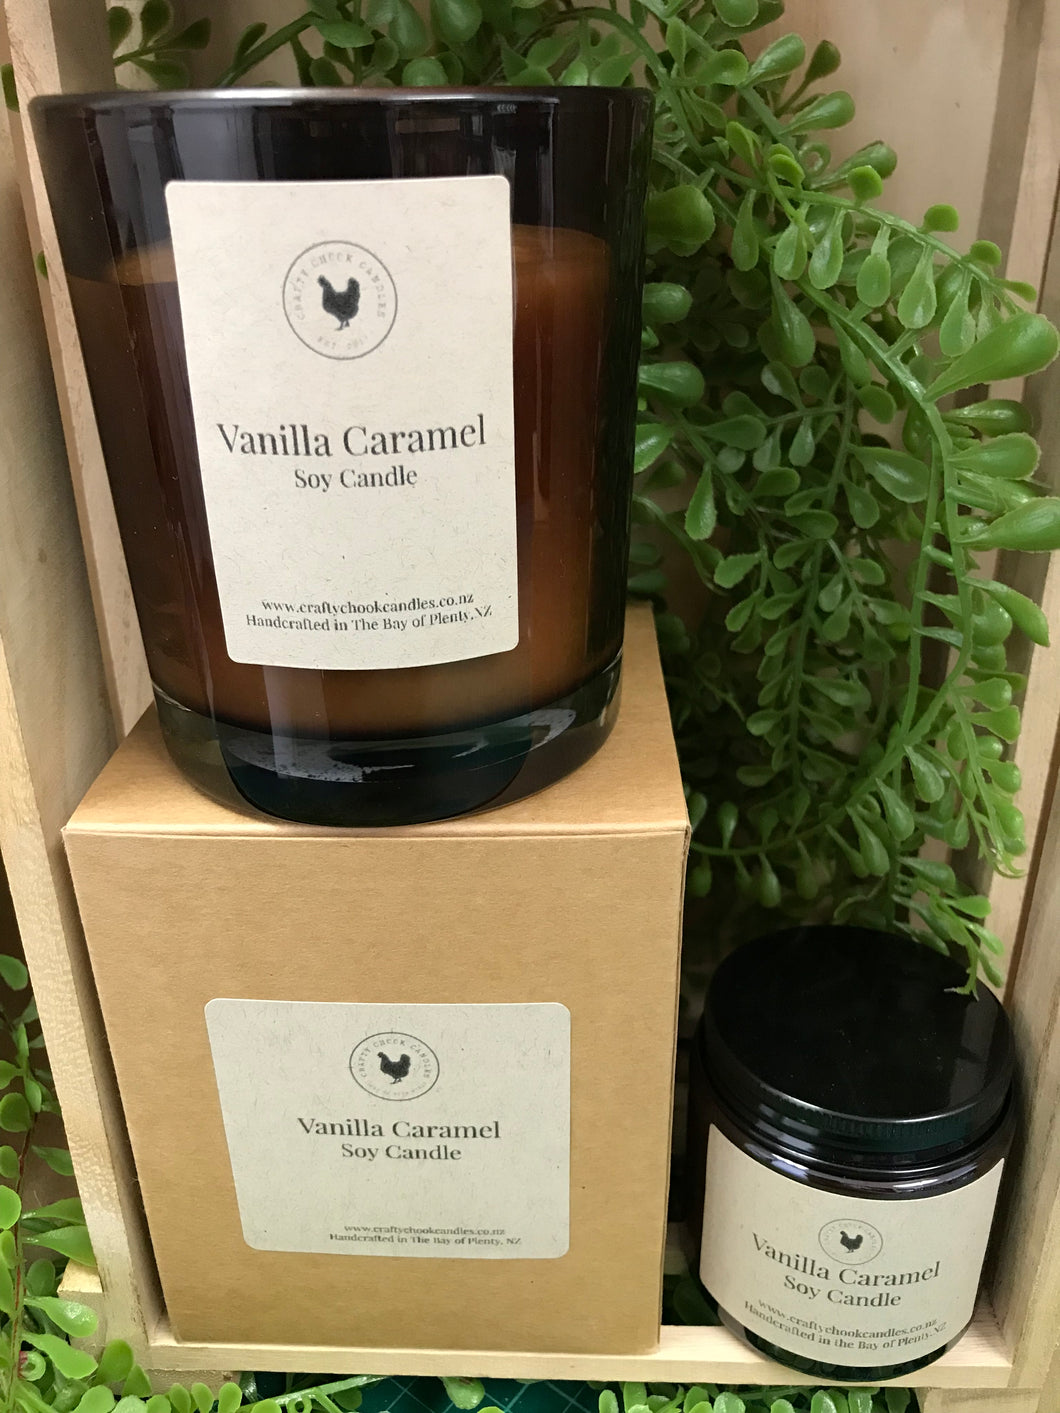 Crafty Chook Candle - Vanilla Caramel